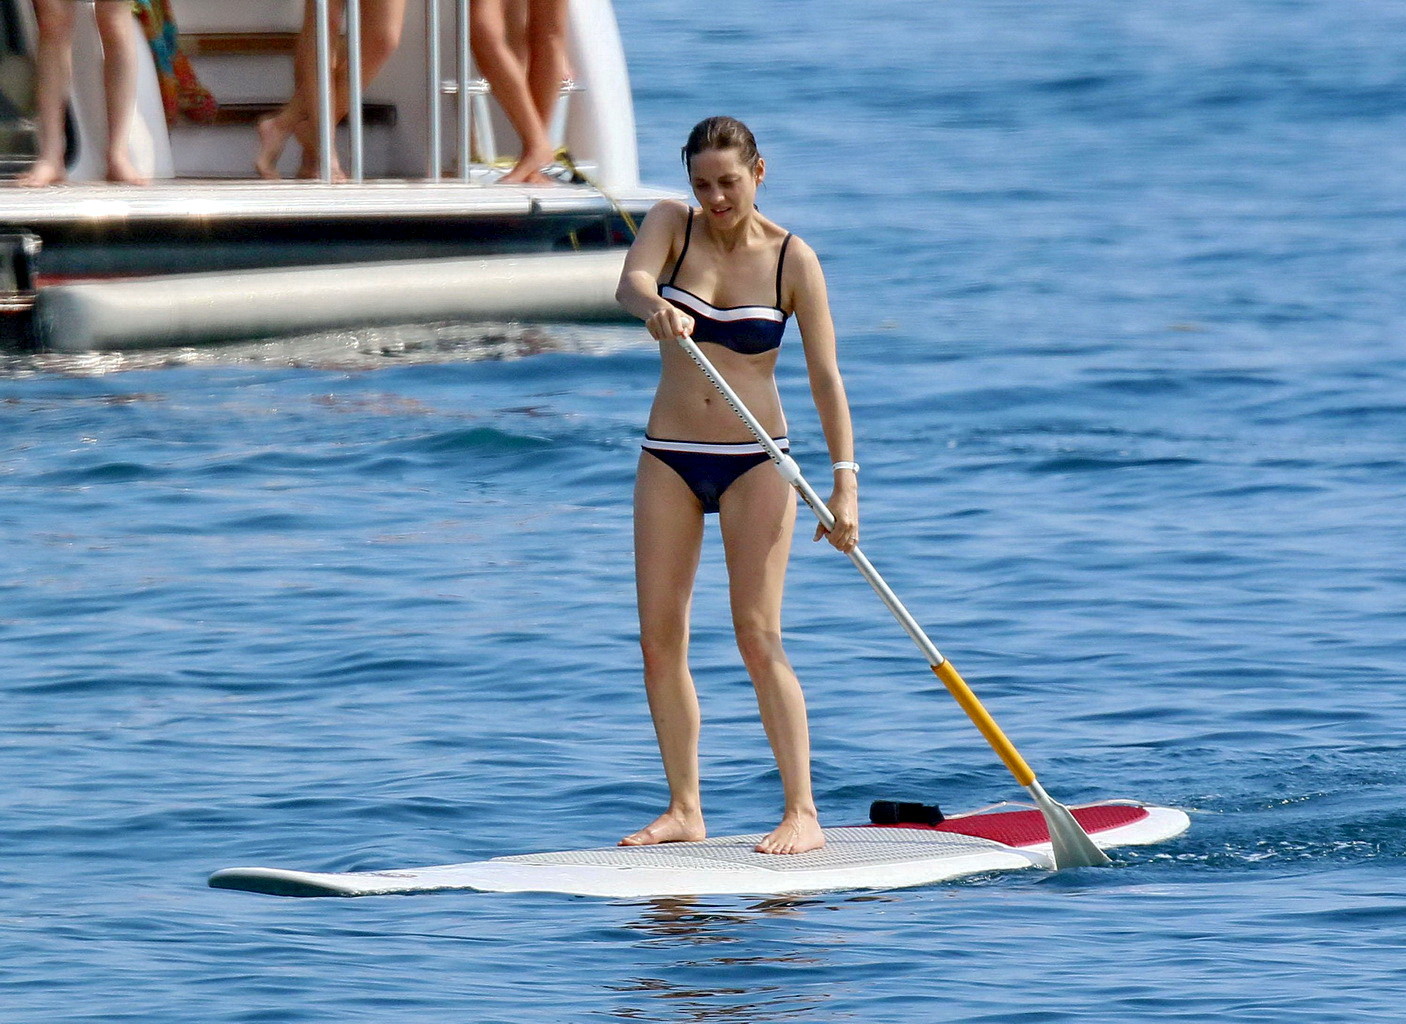 Marion Cotillard paddle boarding in a twotoned bikini #75188363